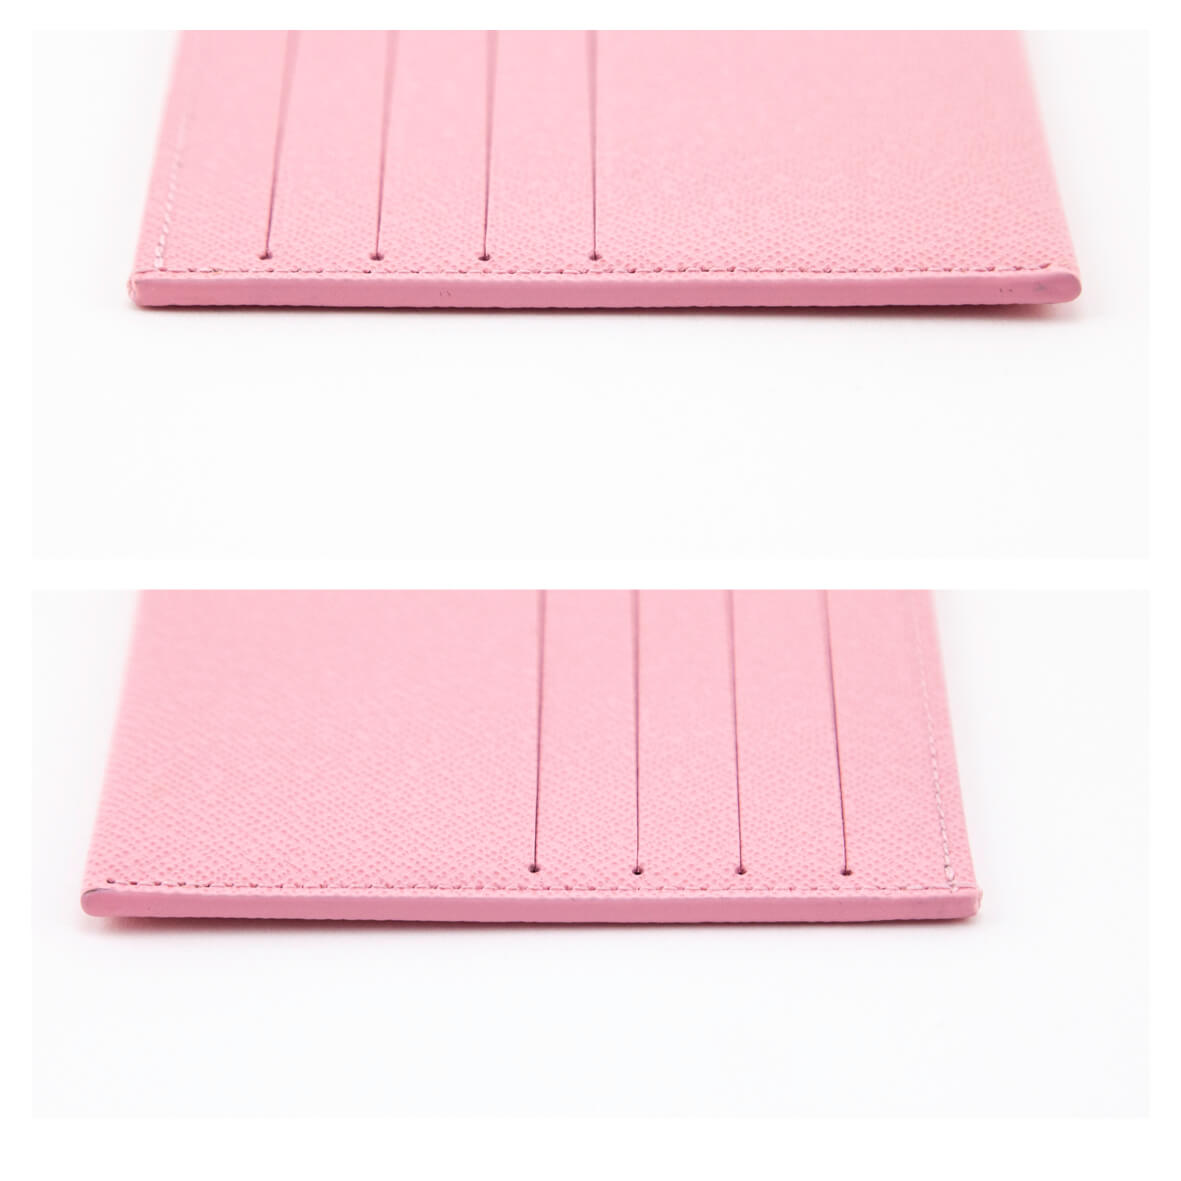 Louis Vuitton Felicie Card Holder Insert Leather Pink 1352875